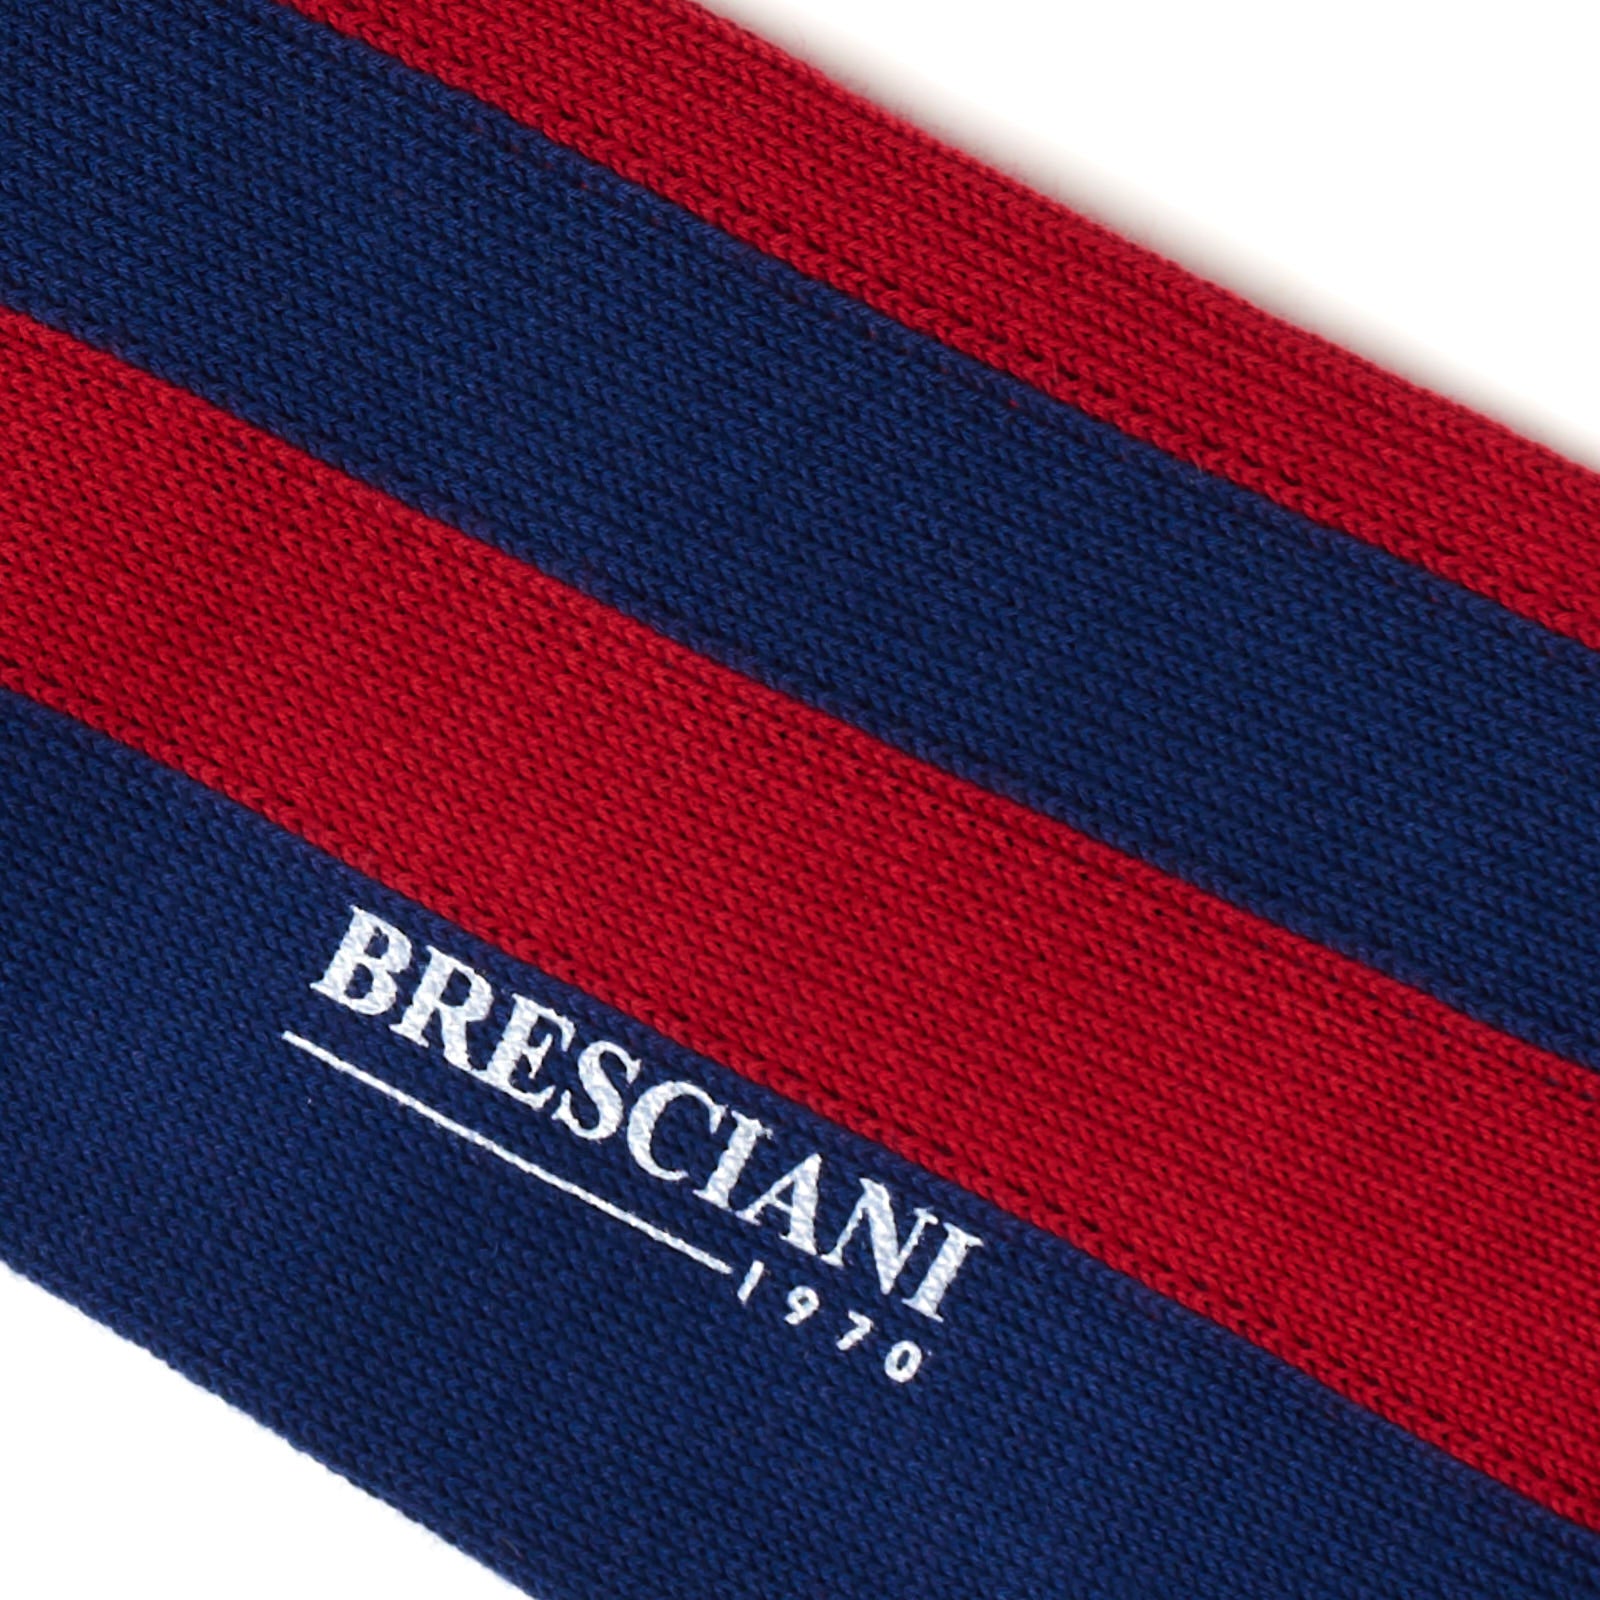 BRESCIANI Awning Striped Design Mid Calf Length Socks M-L BRESCIANI